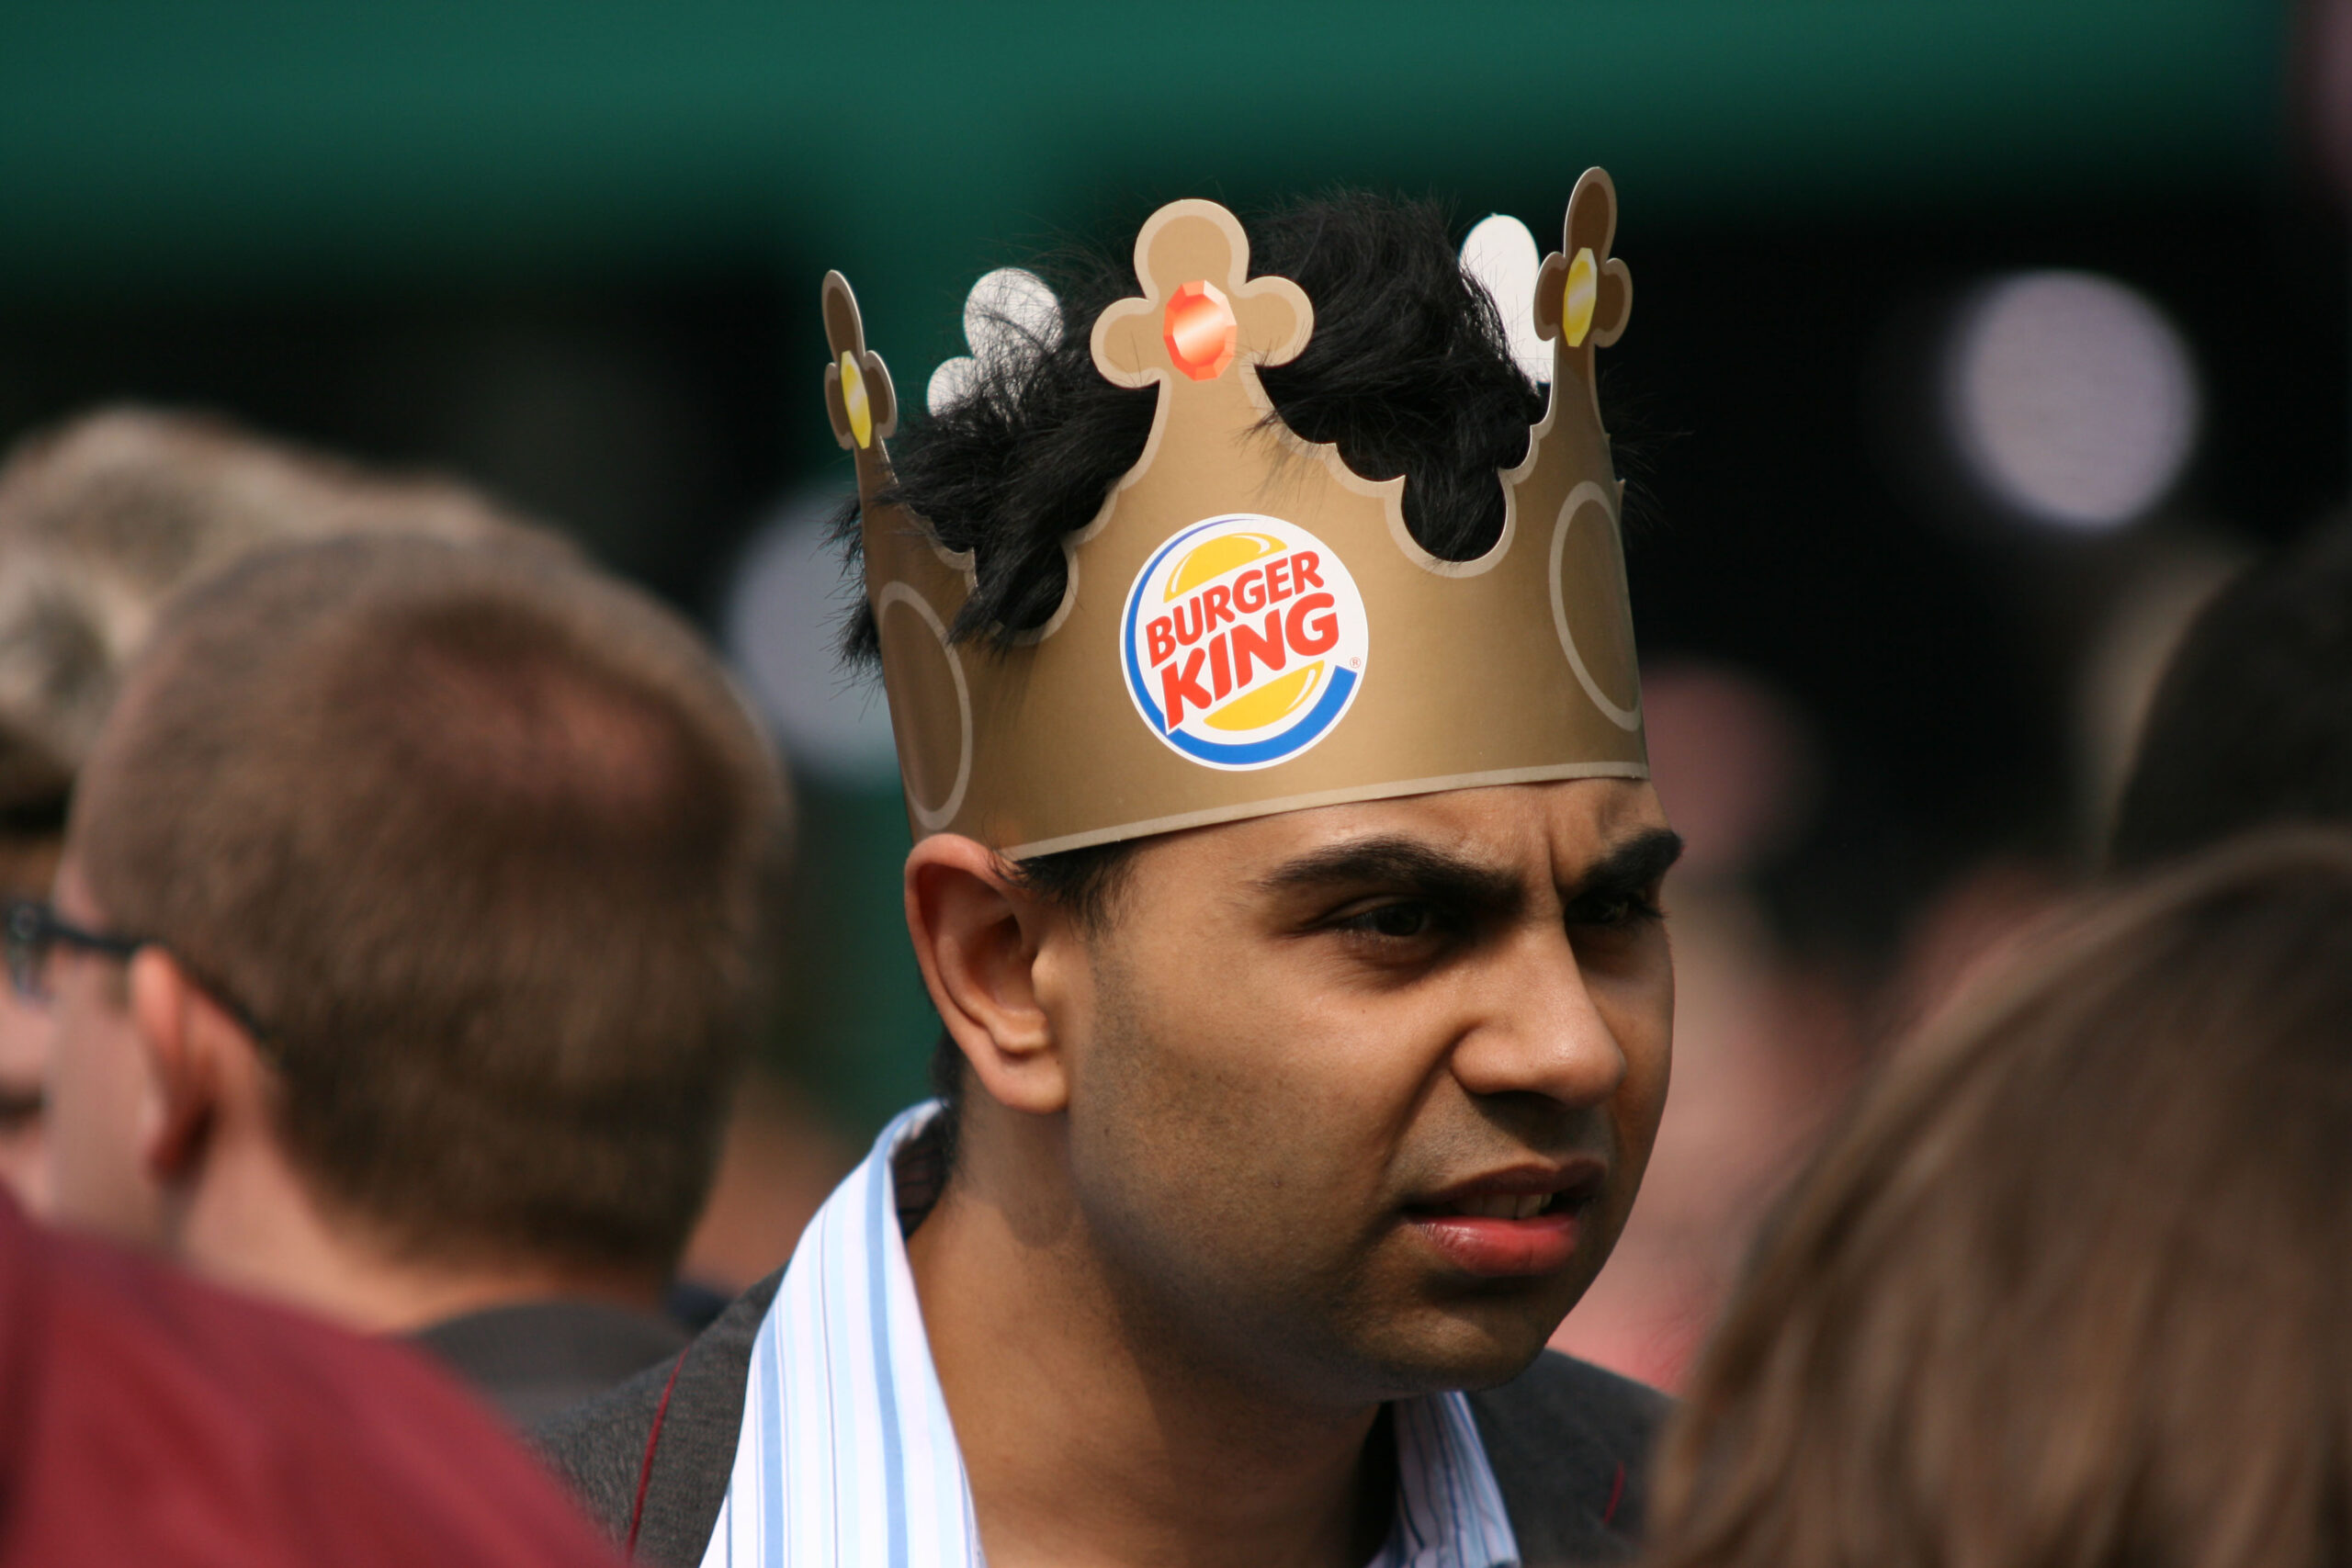 Burger King Serves Up Sensitive Data, No Mayo – Source: www.darkreading.com